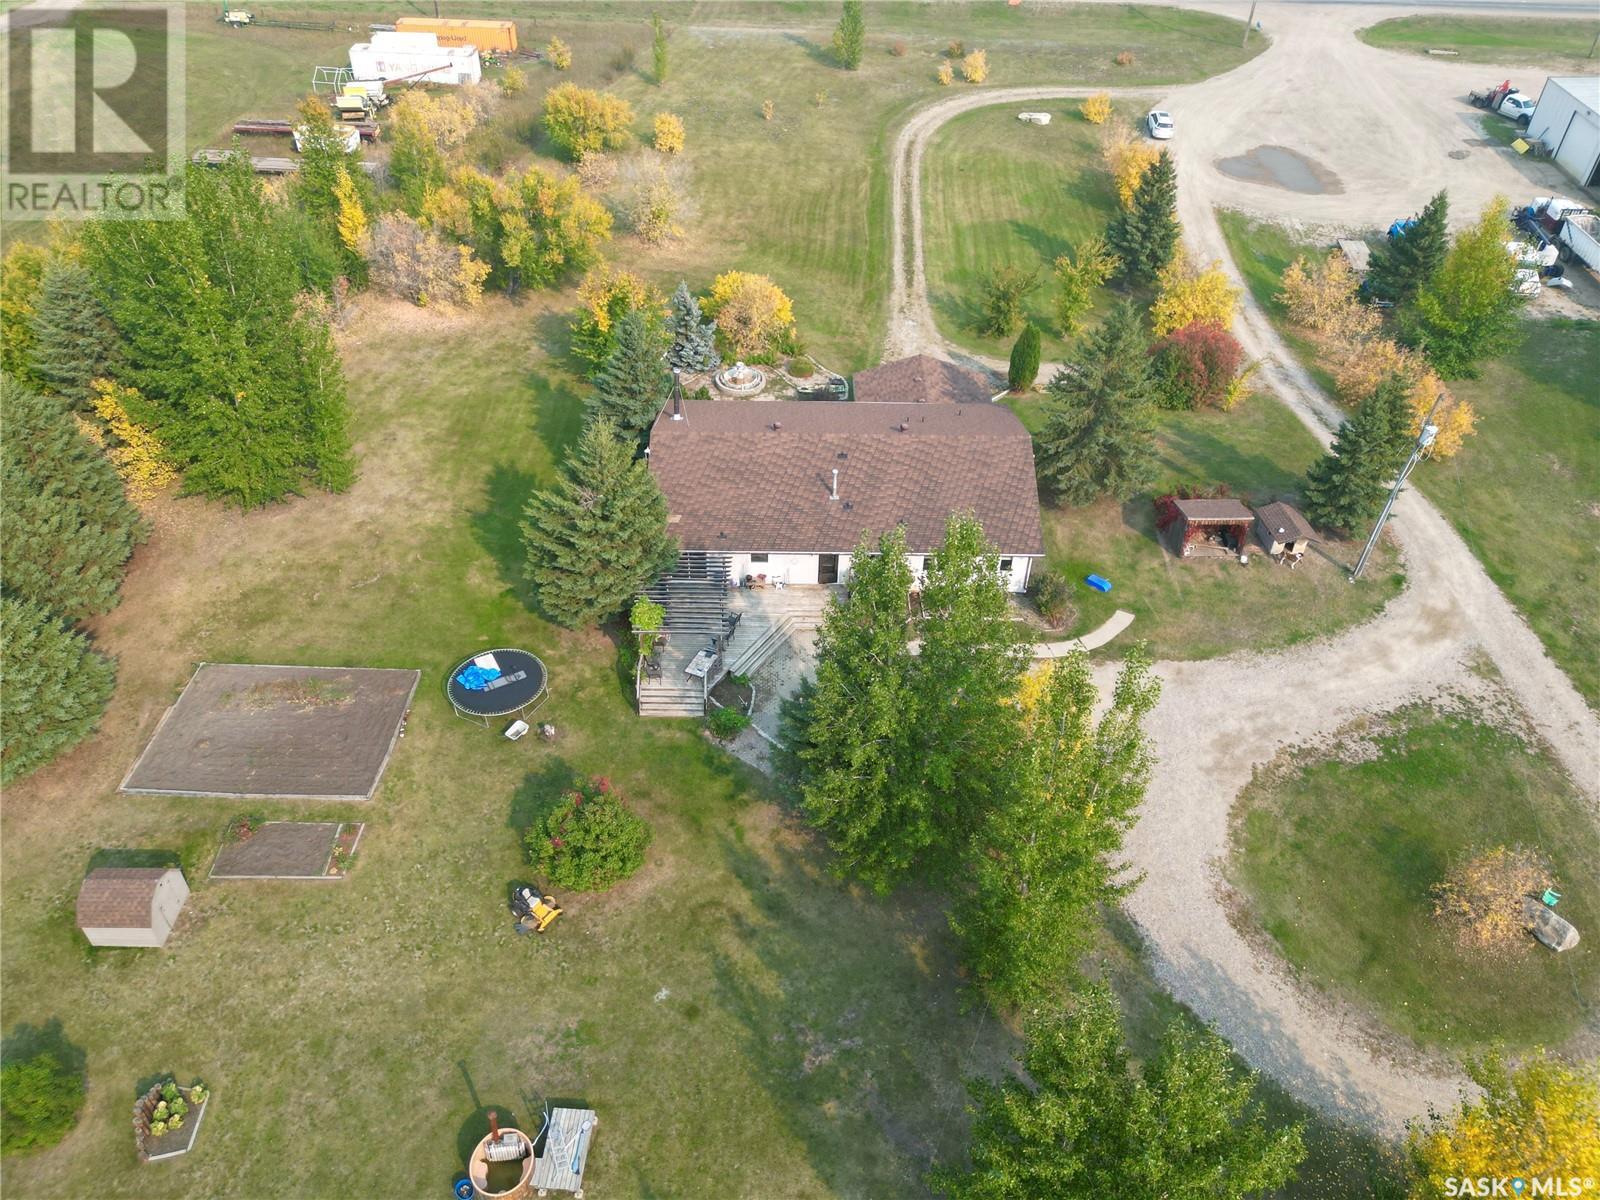 Locke Acreage, mervin rm no.499, Saskatchewan